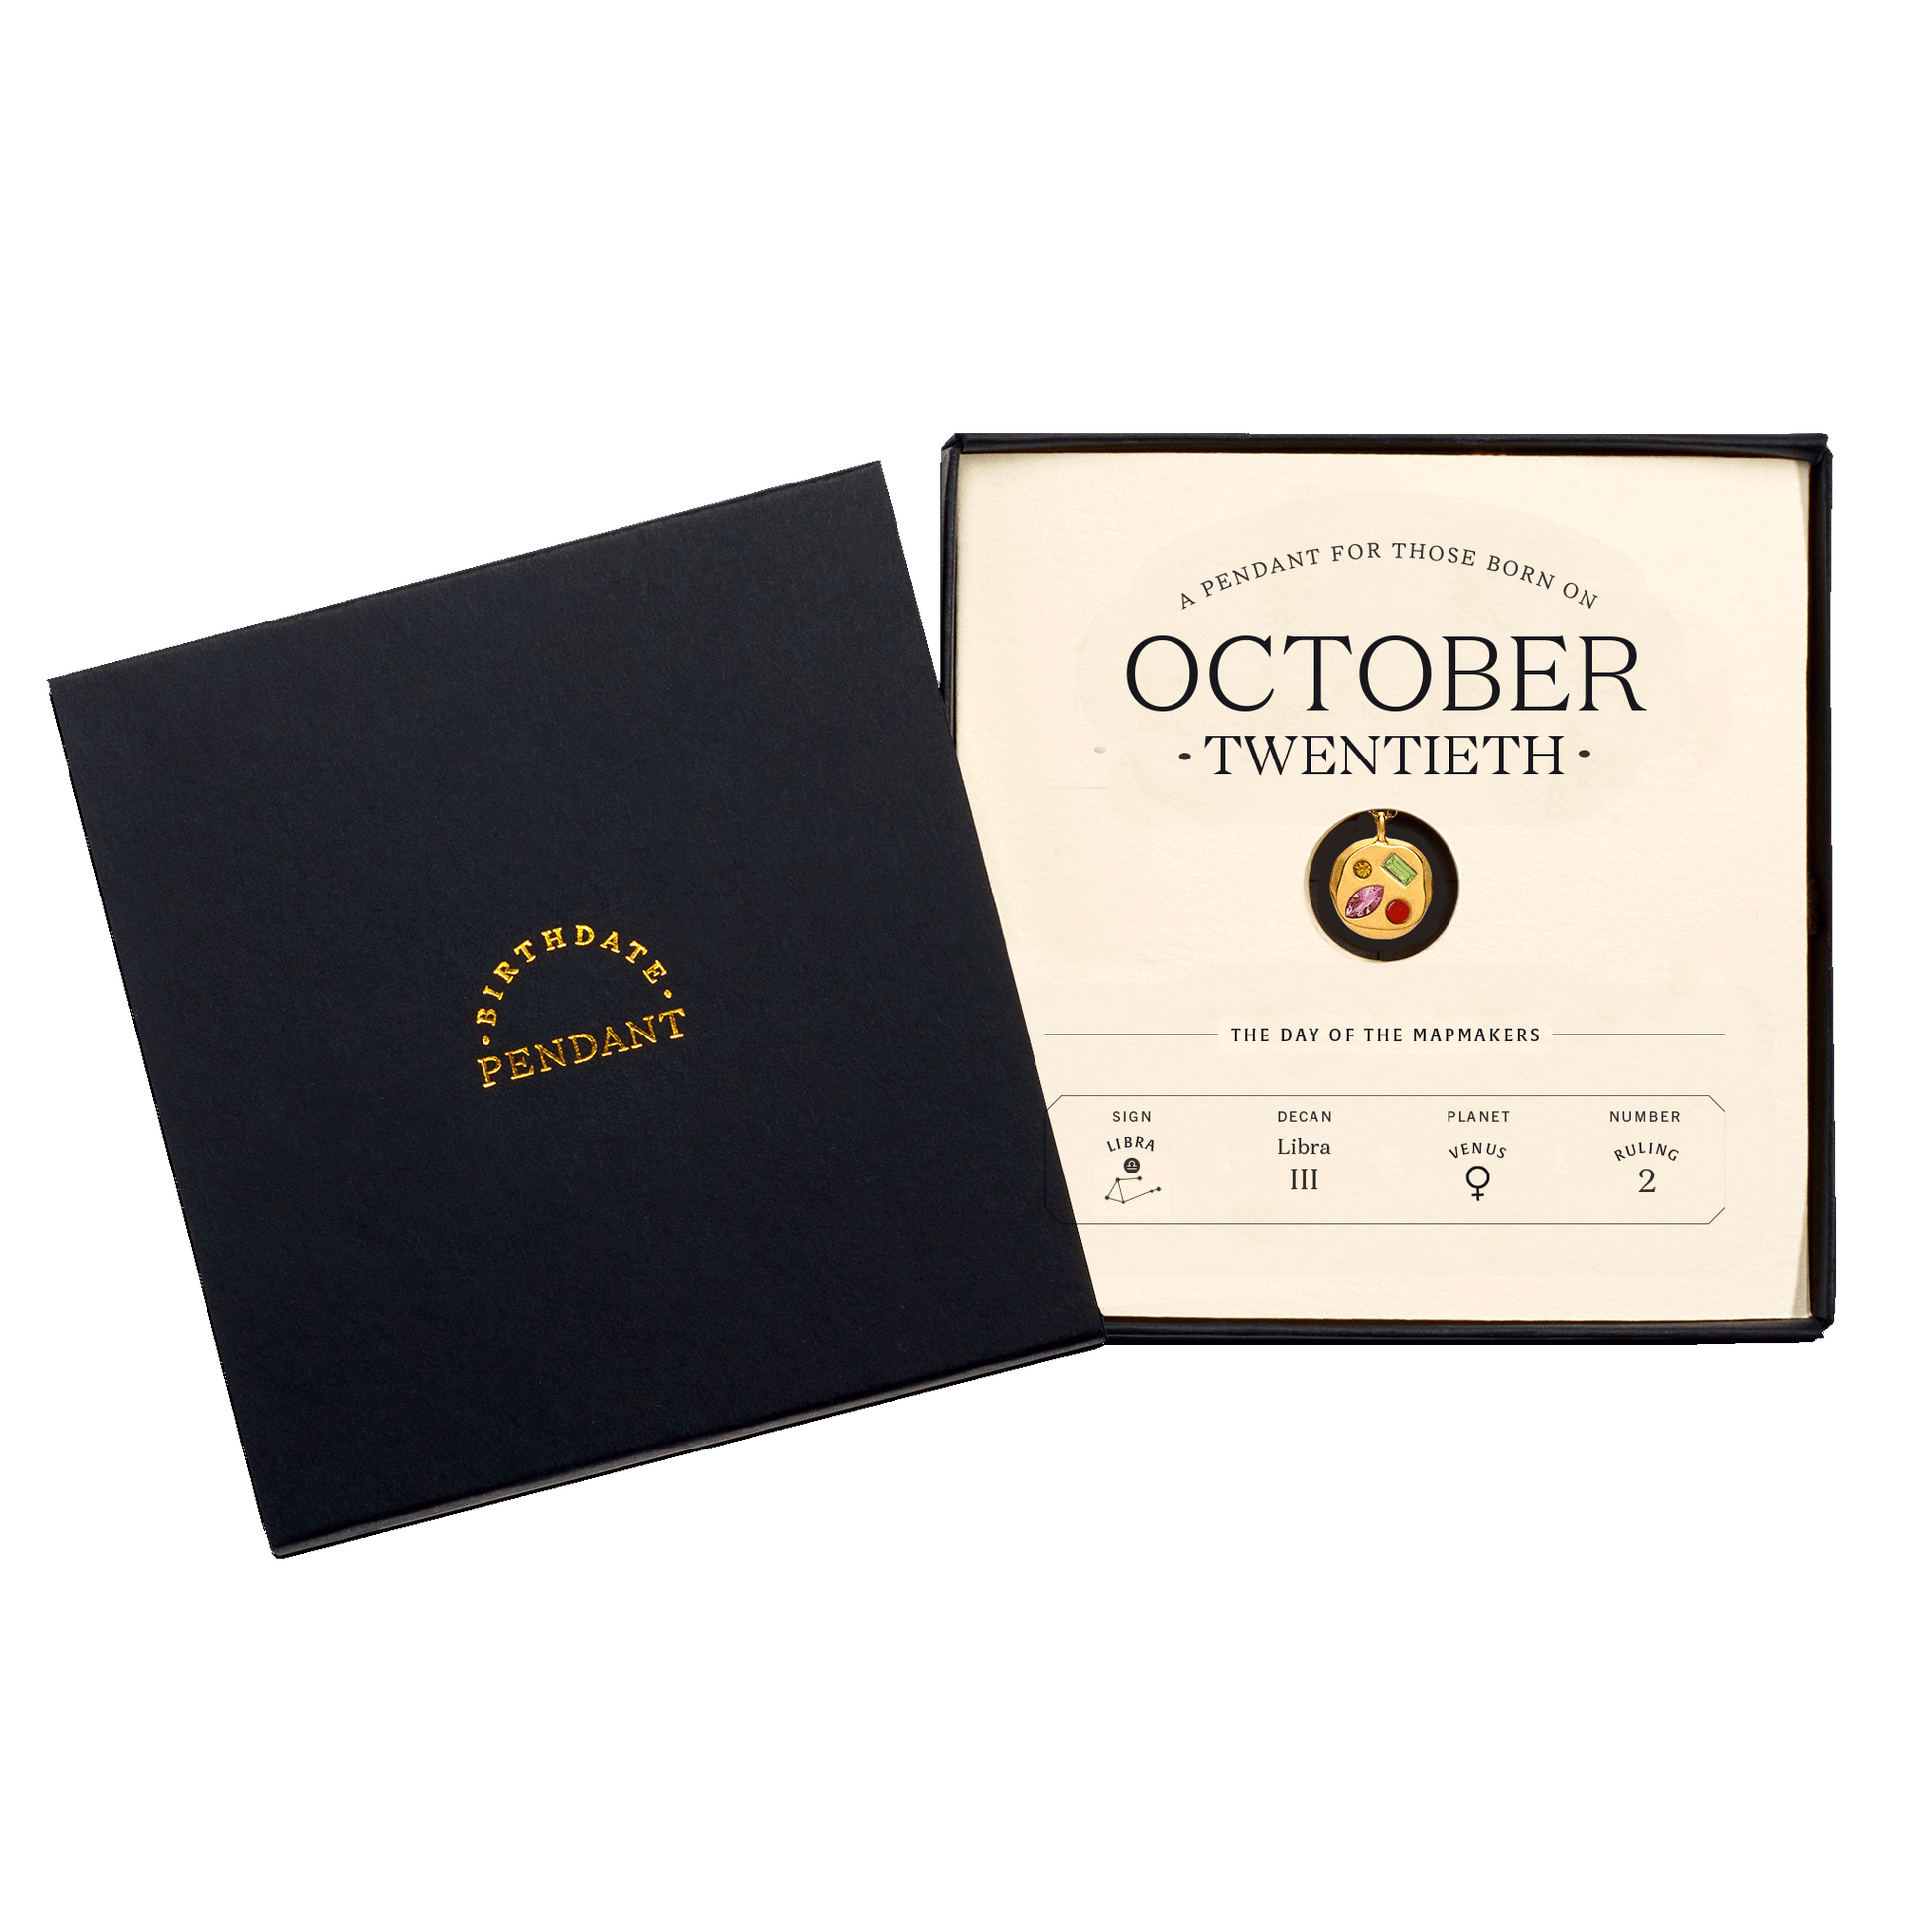 The October Twentieth Pendant inside its box